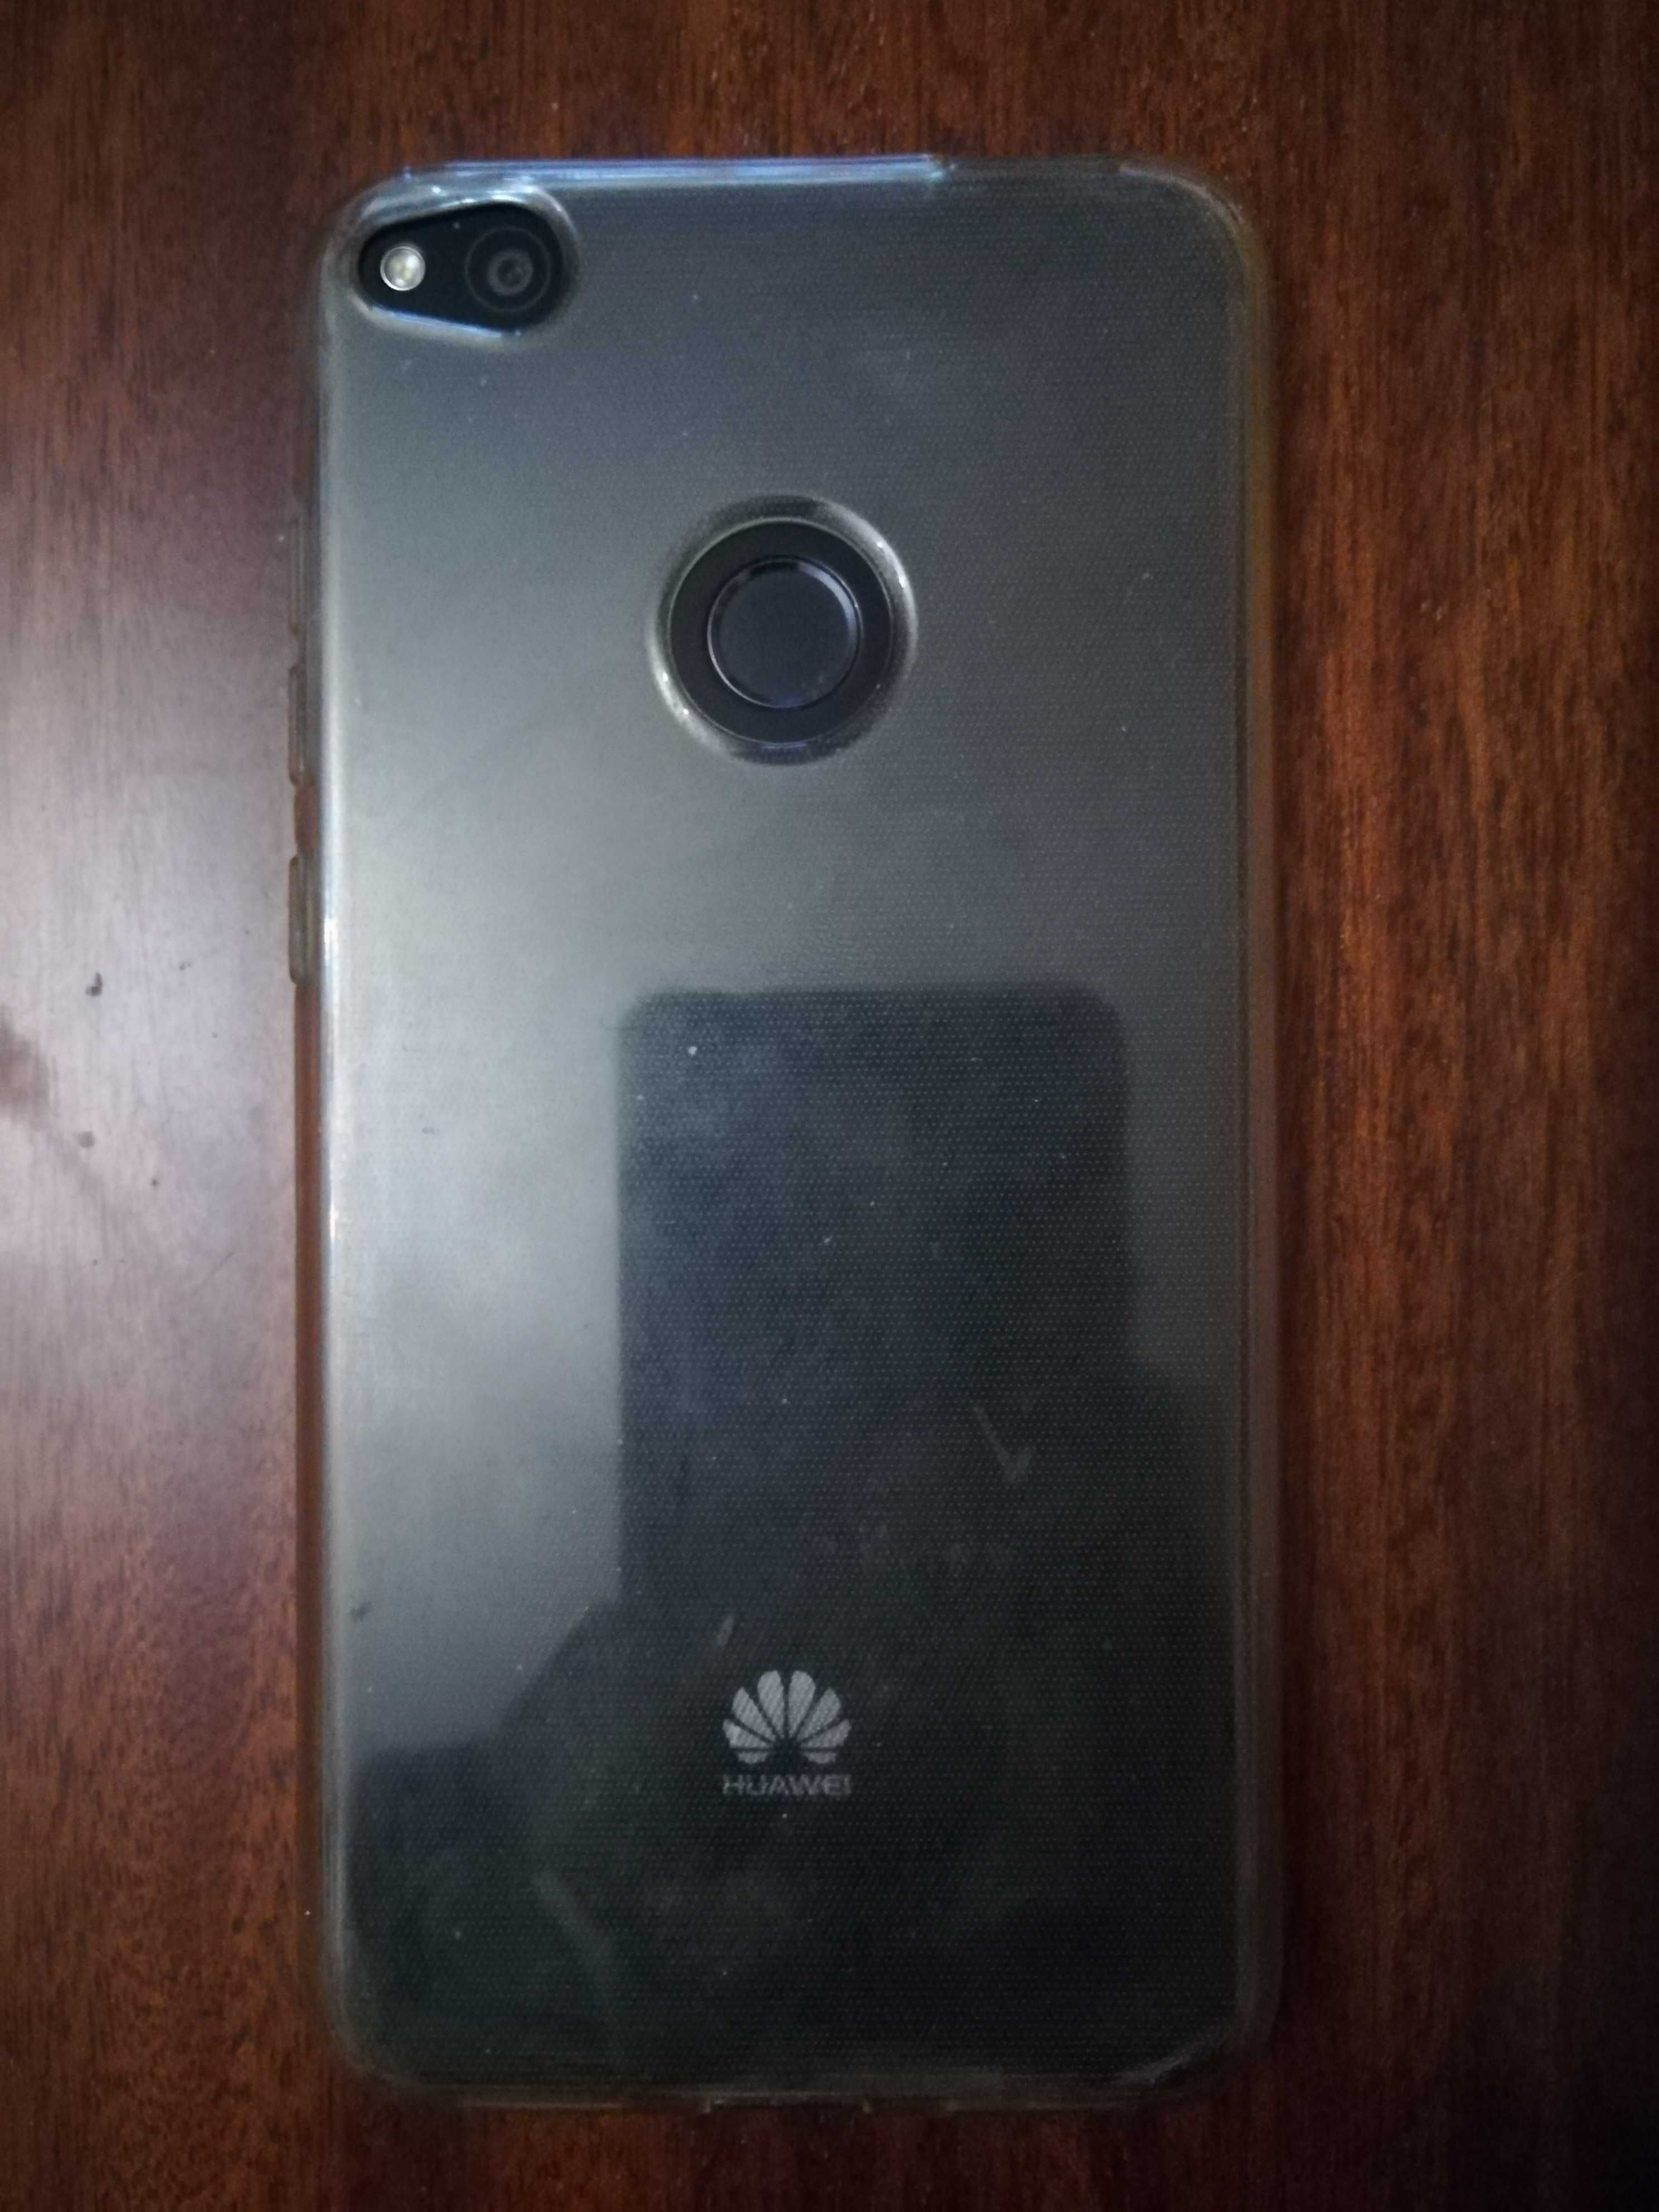 Смартфон Huawei P8 Lite 2017